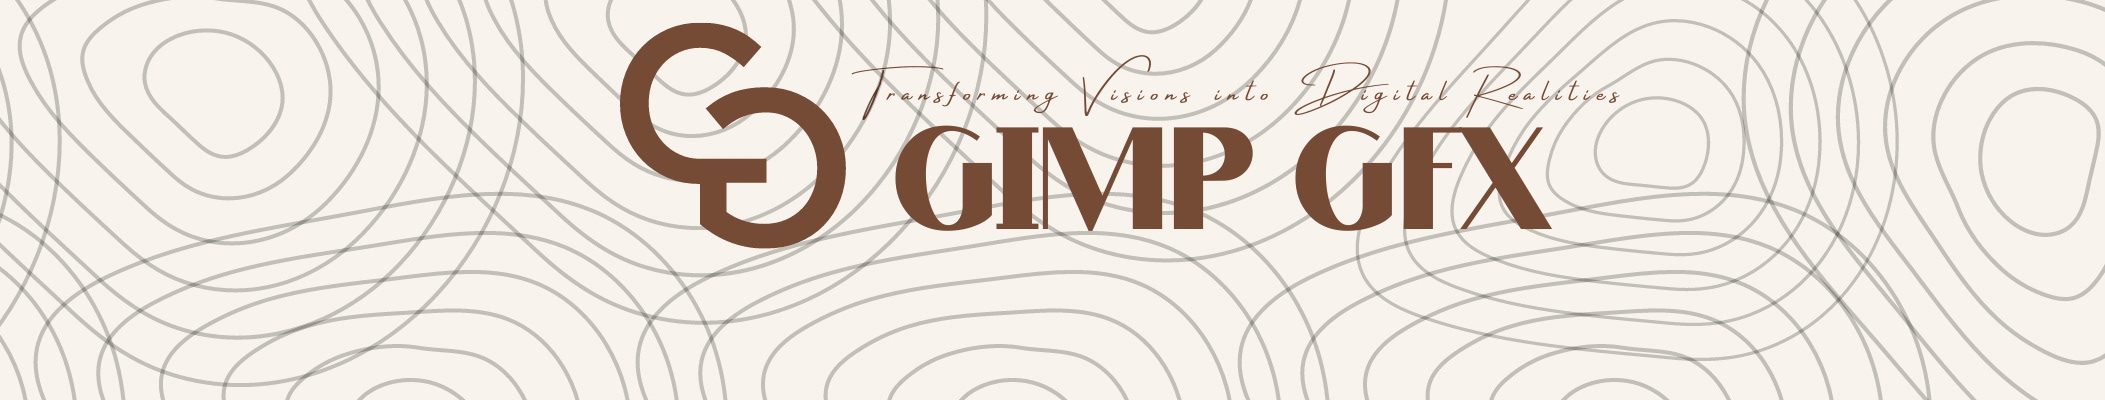 Gimp Graphics's profile banner